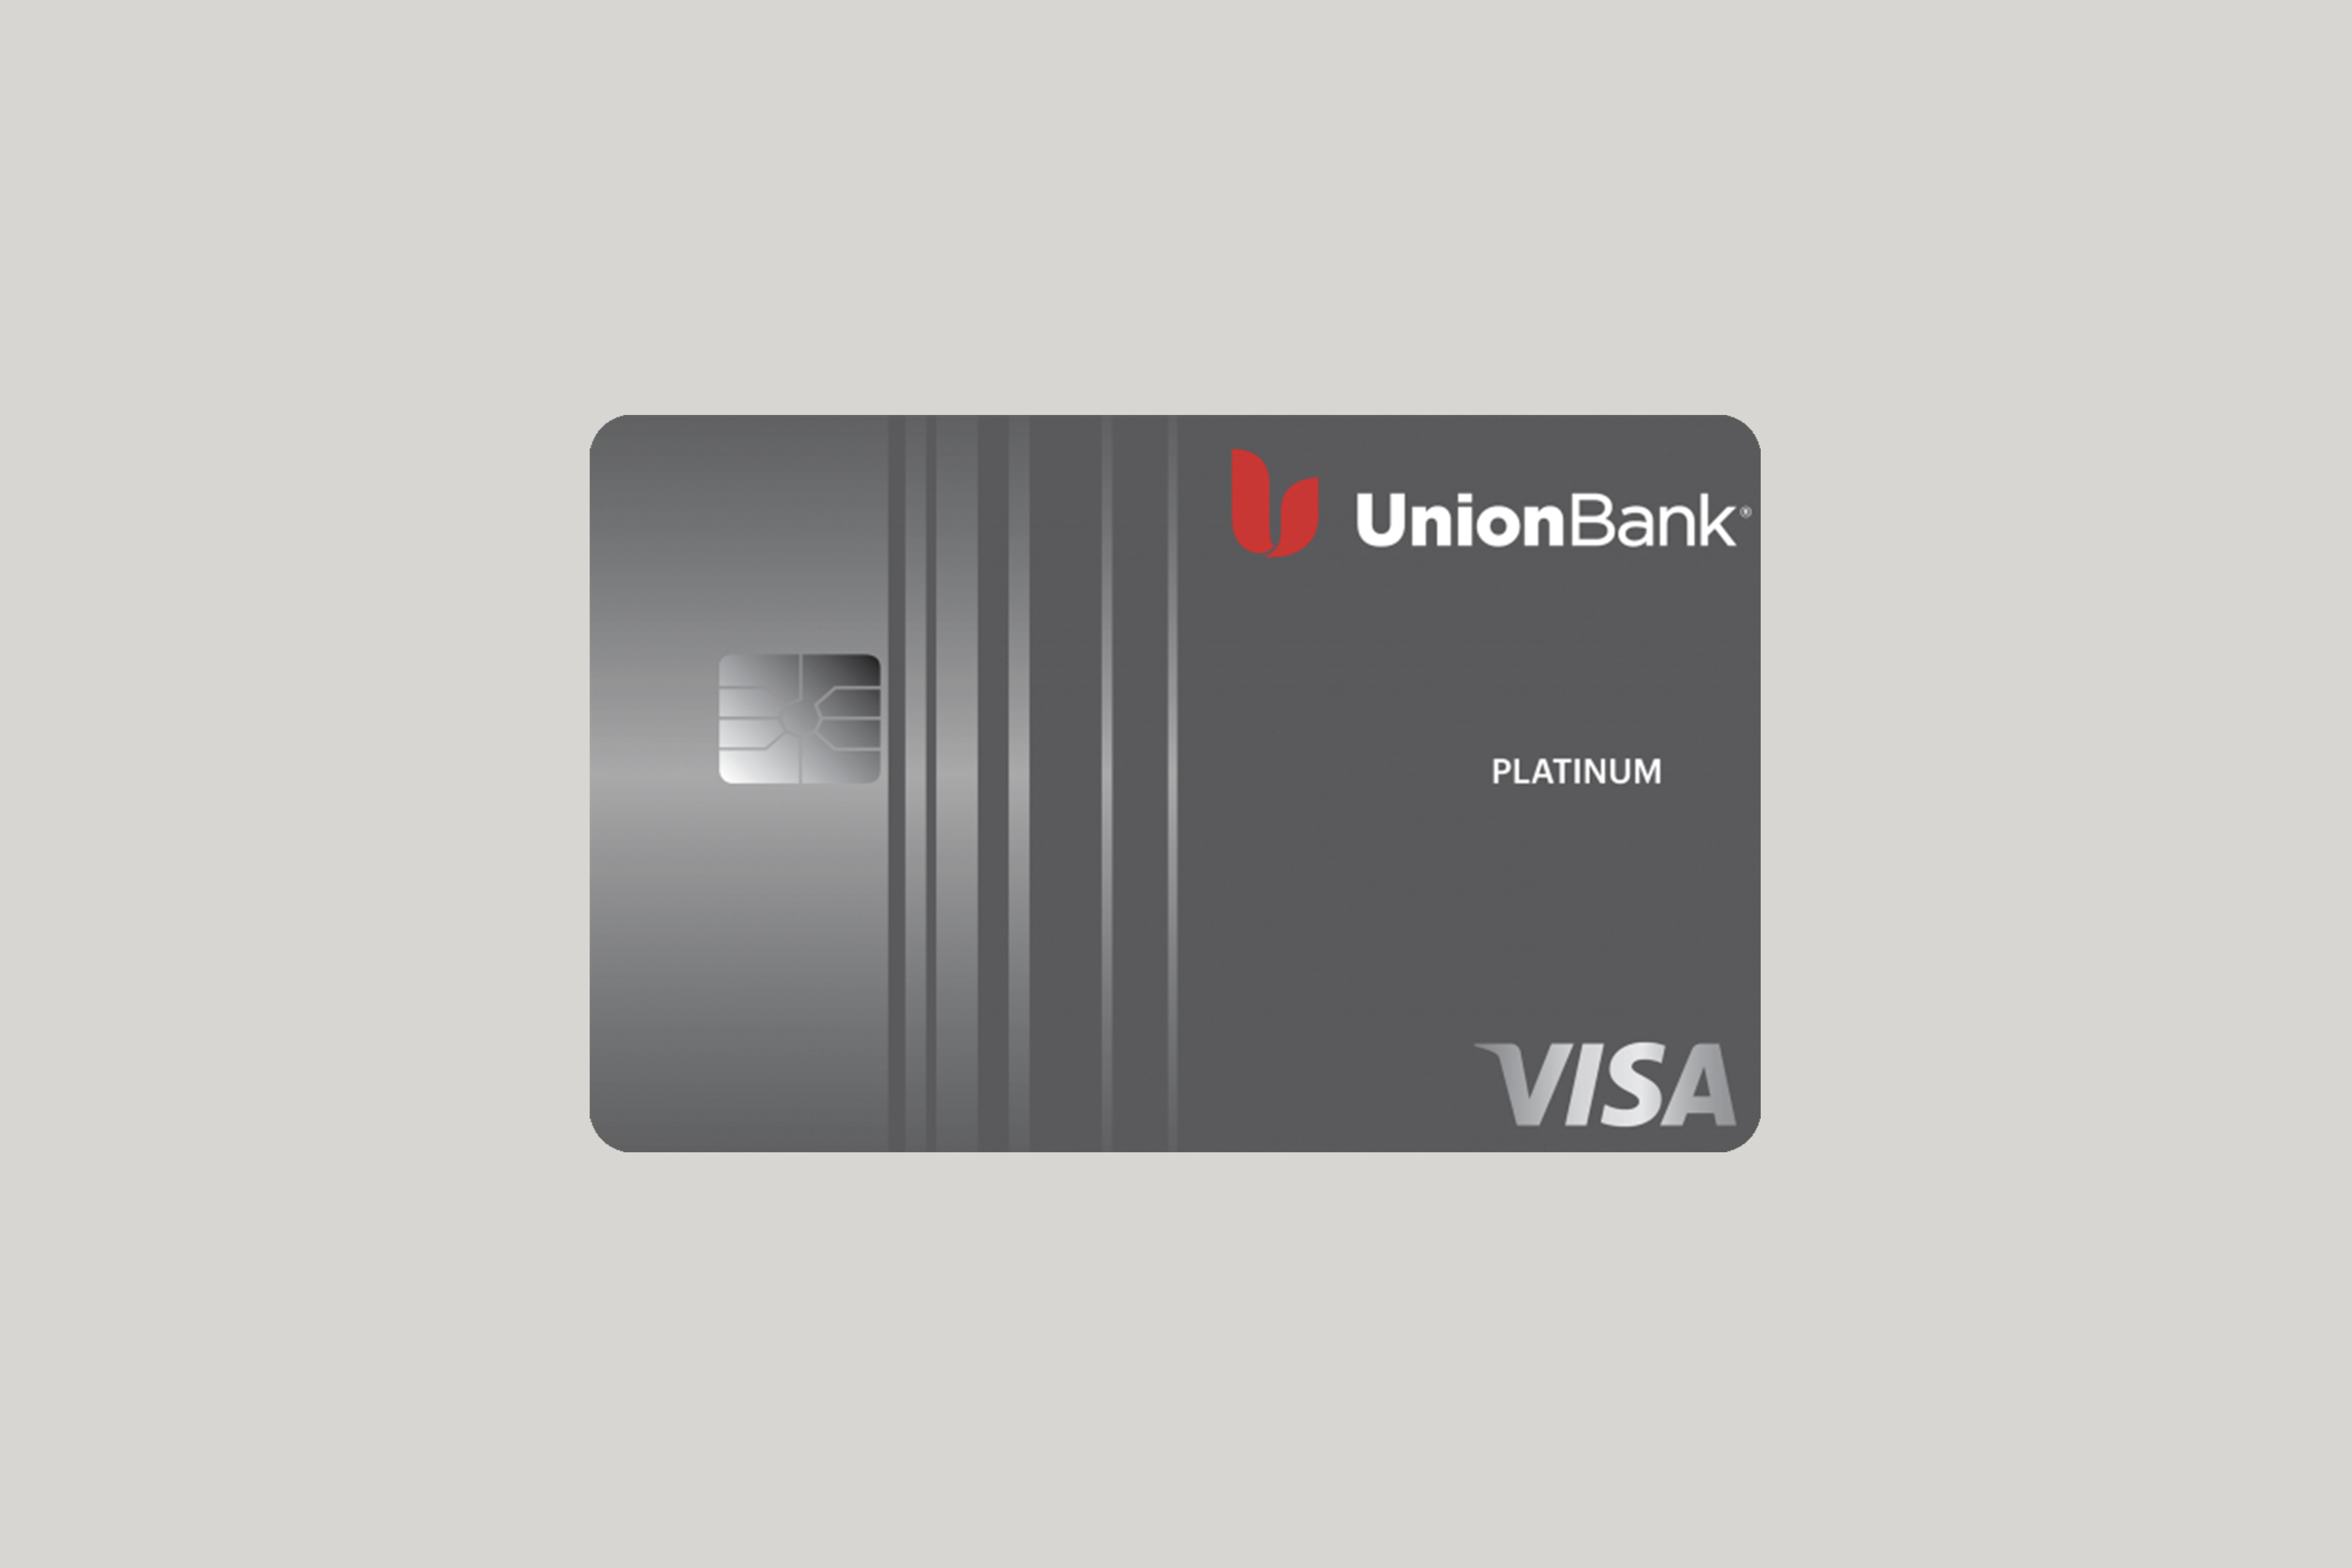 Union BankÂ® Platinumâ¢ VisaÂ® Credit Card